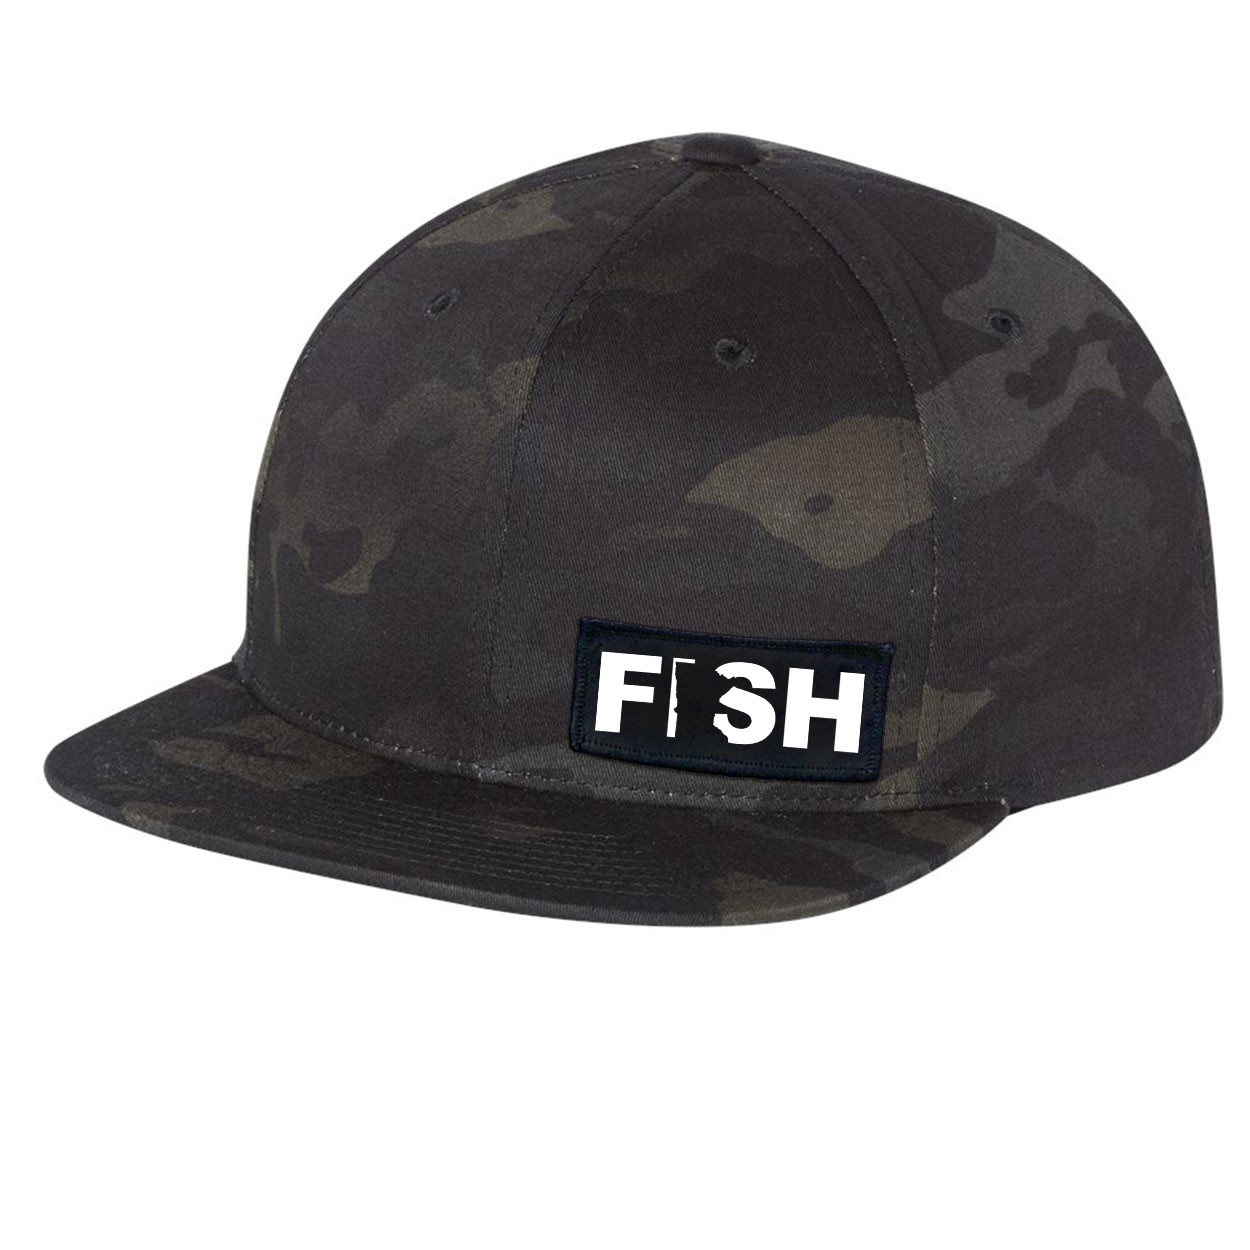 Fish Minnesota Night Out Woven Patch Flat Brim Snapback Hat Black Camo (White Logo)